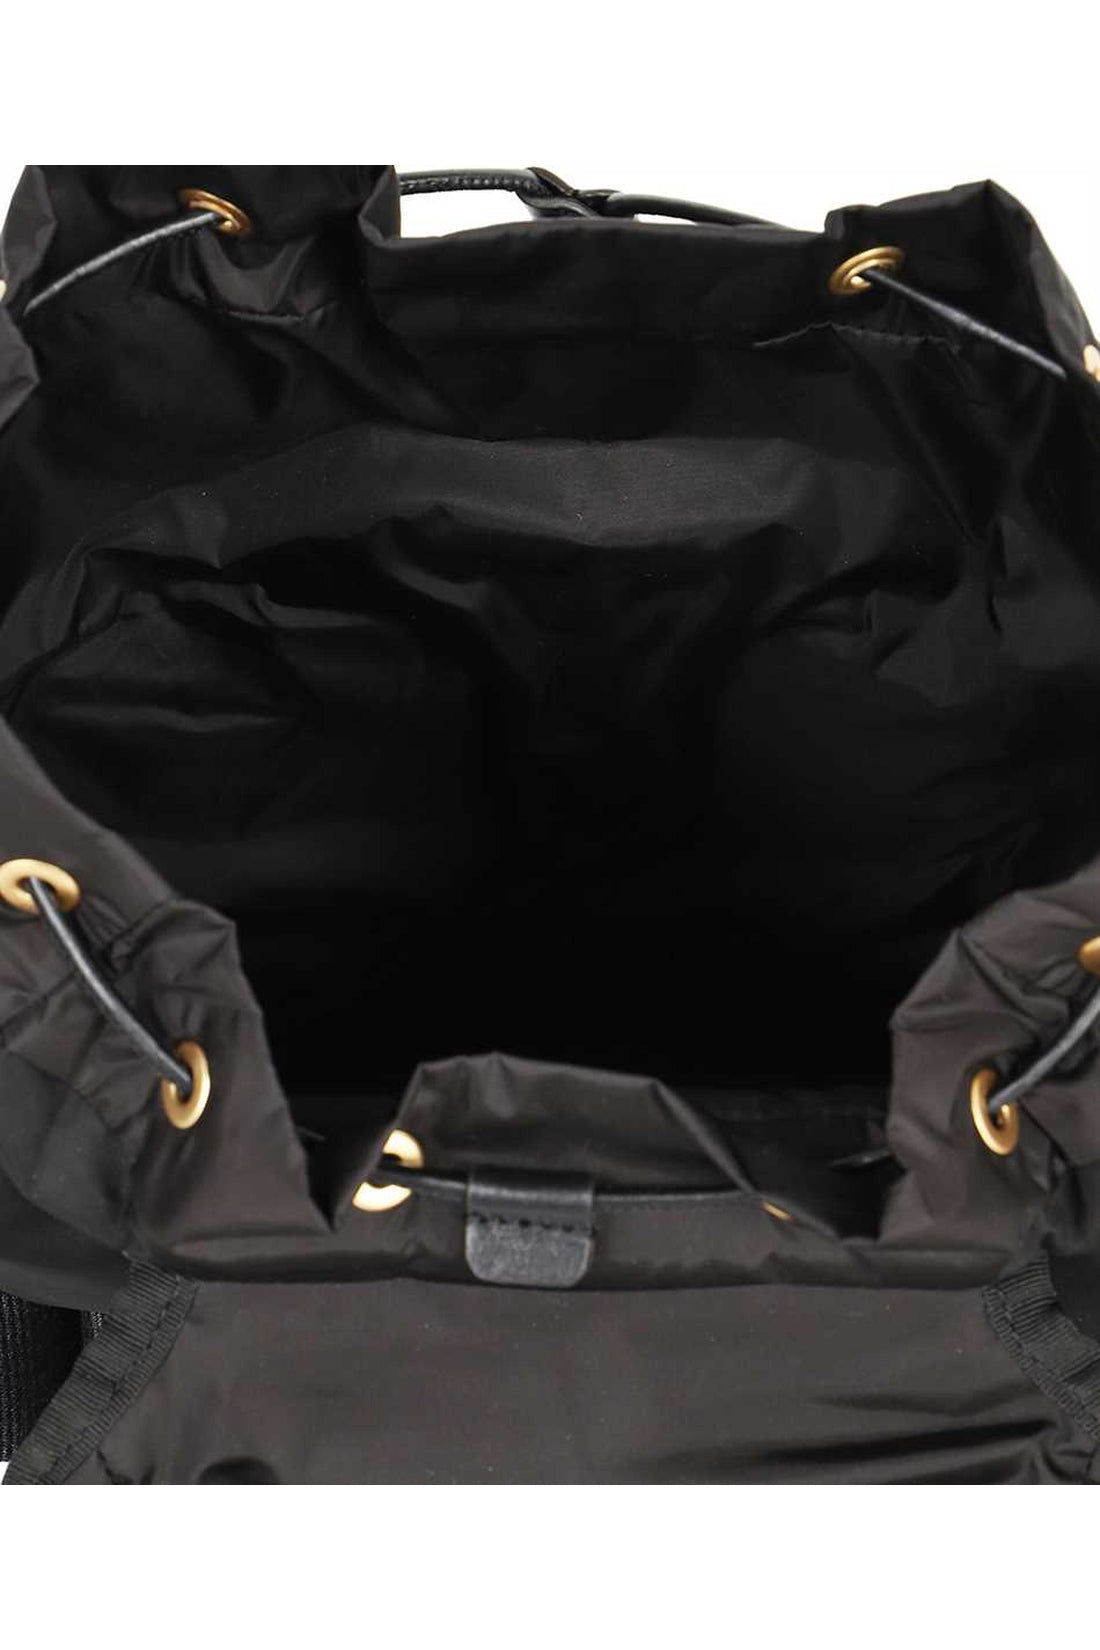 Moncler-OUTLET-SALE-Nylon backpack-ARCHIVIST